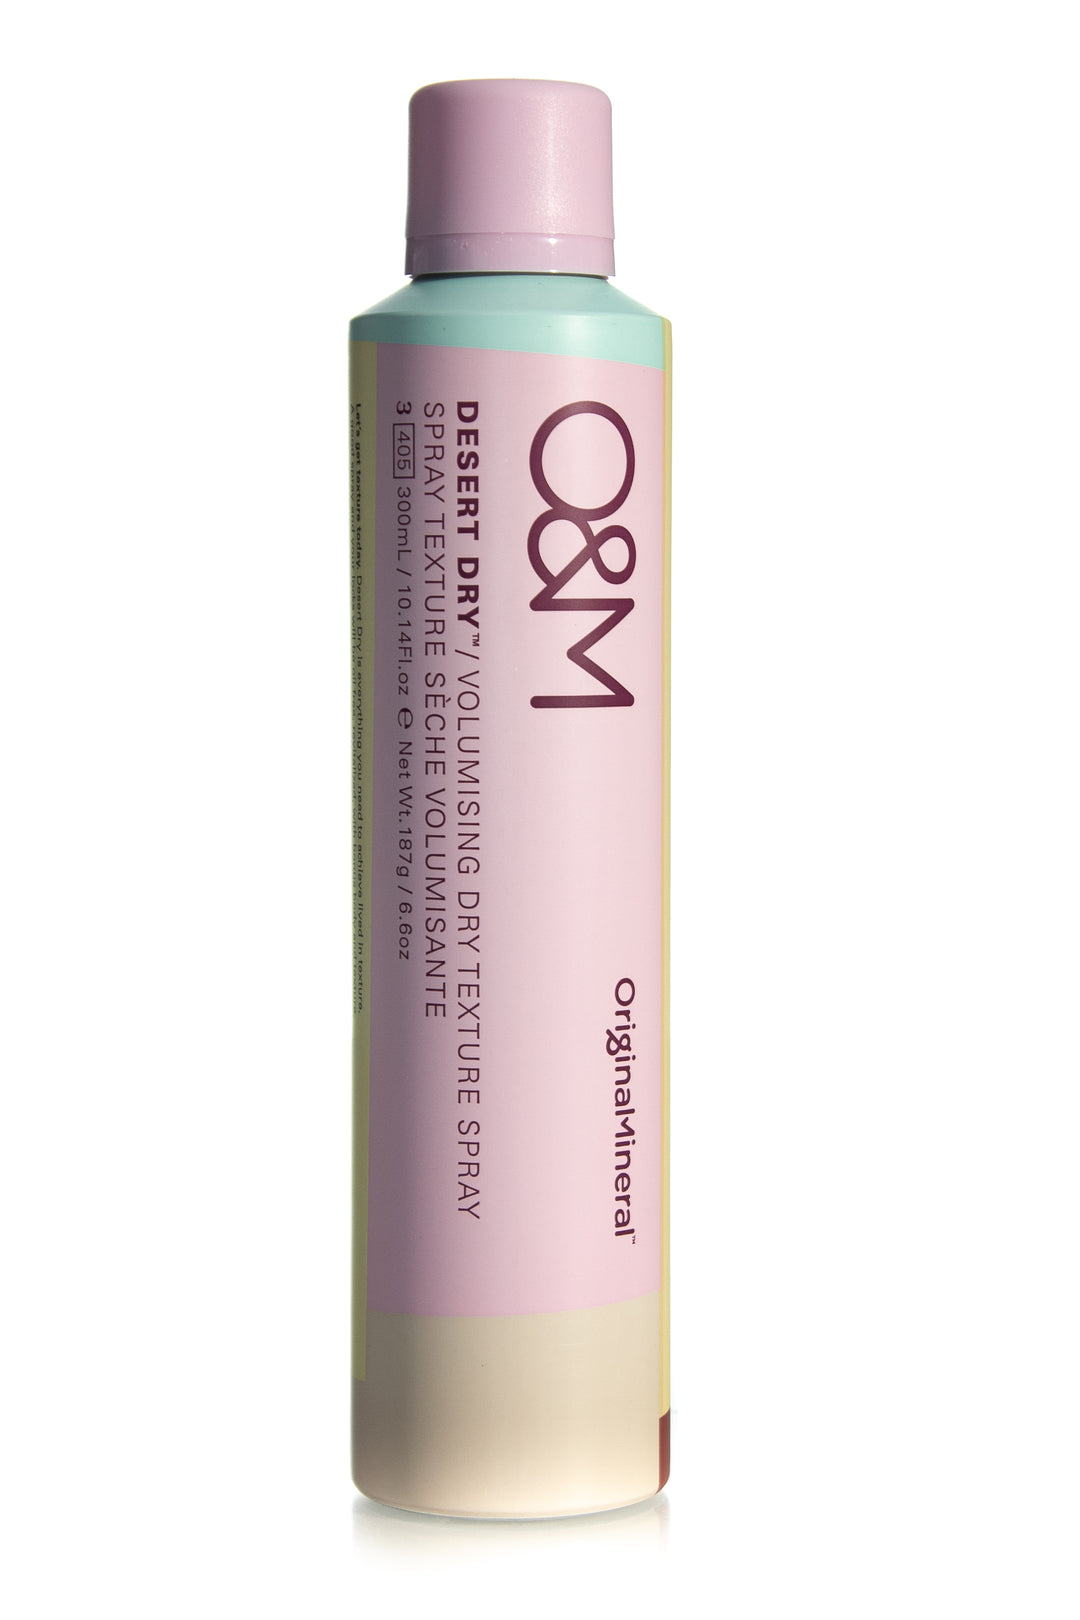 O&M Desert Dry Volumising Dry Texture Spray